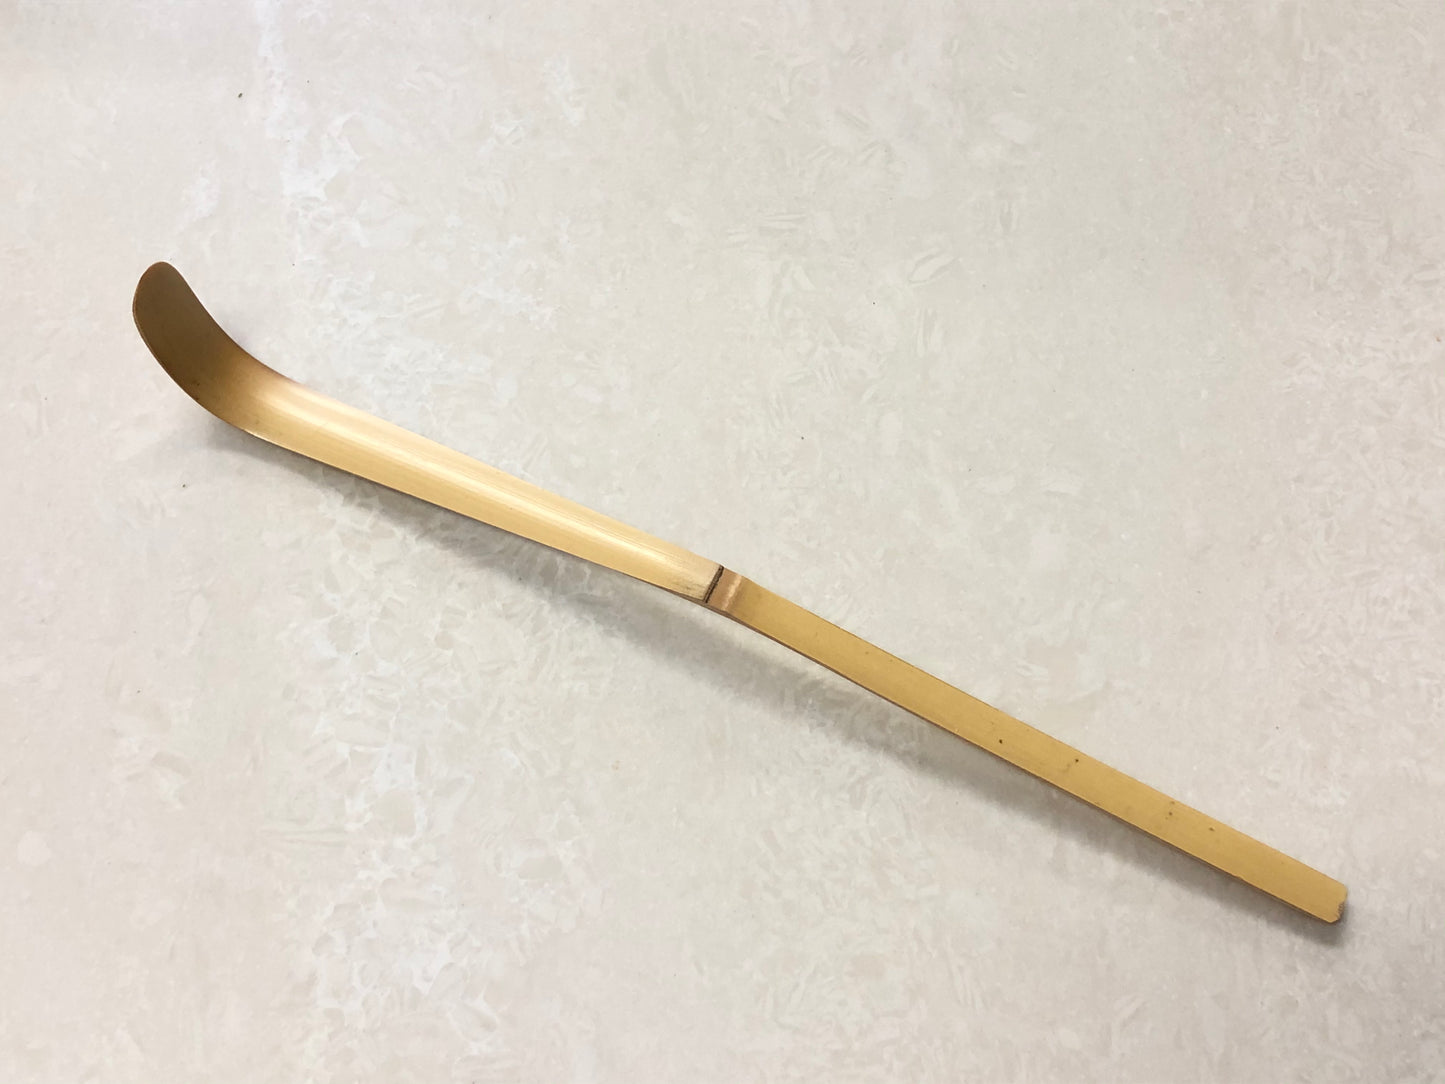 Bamboo scoop "Chashaku" for Matcha